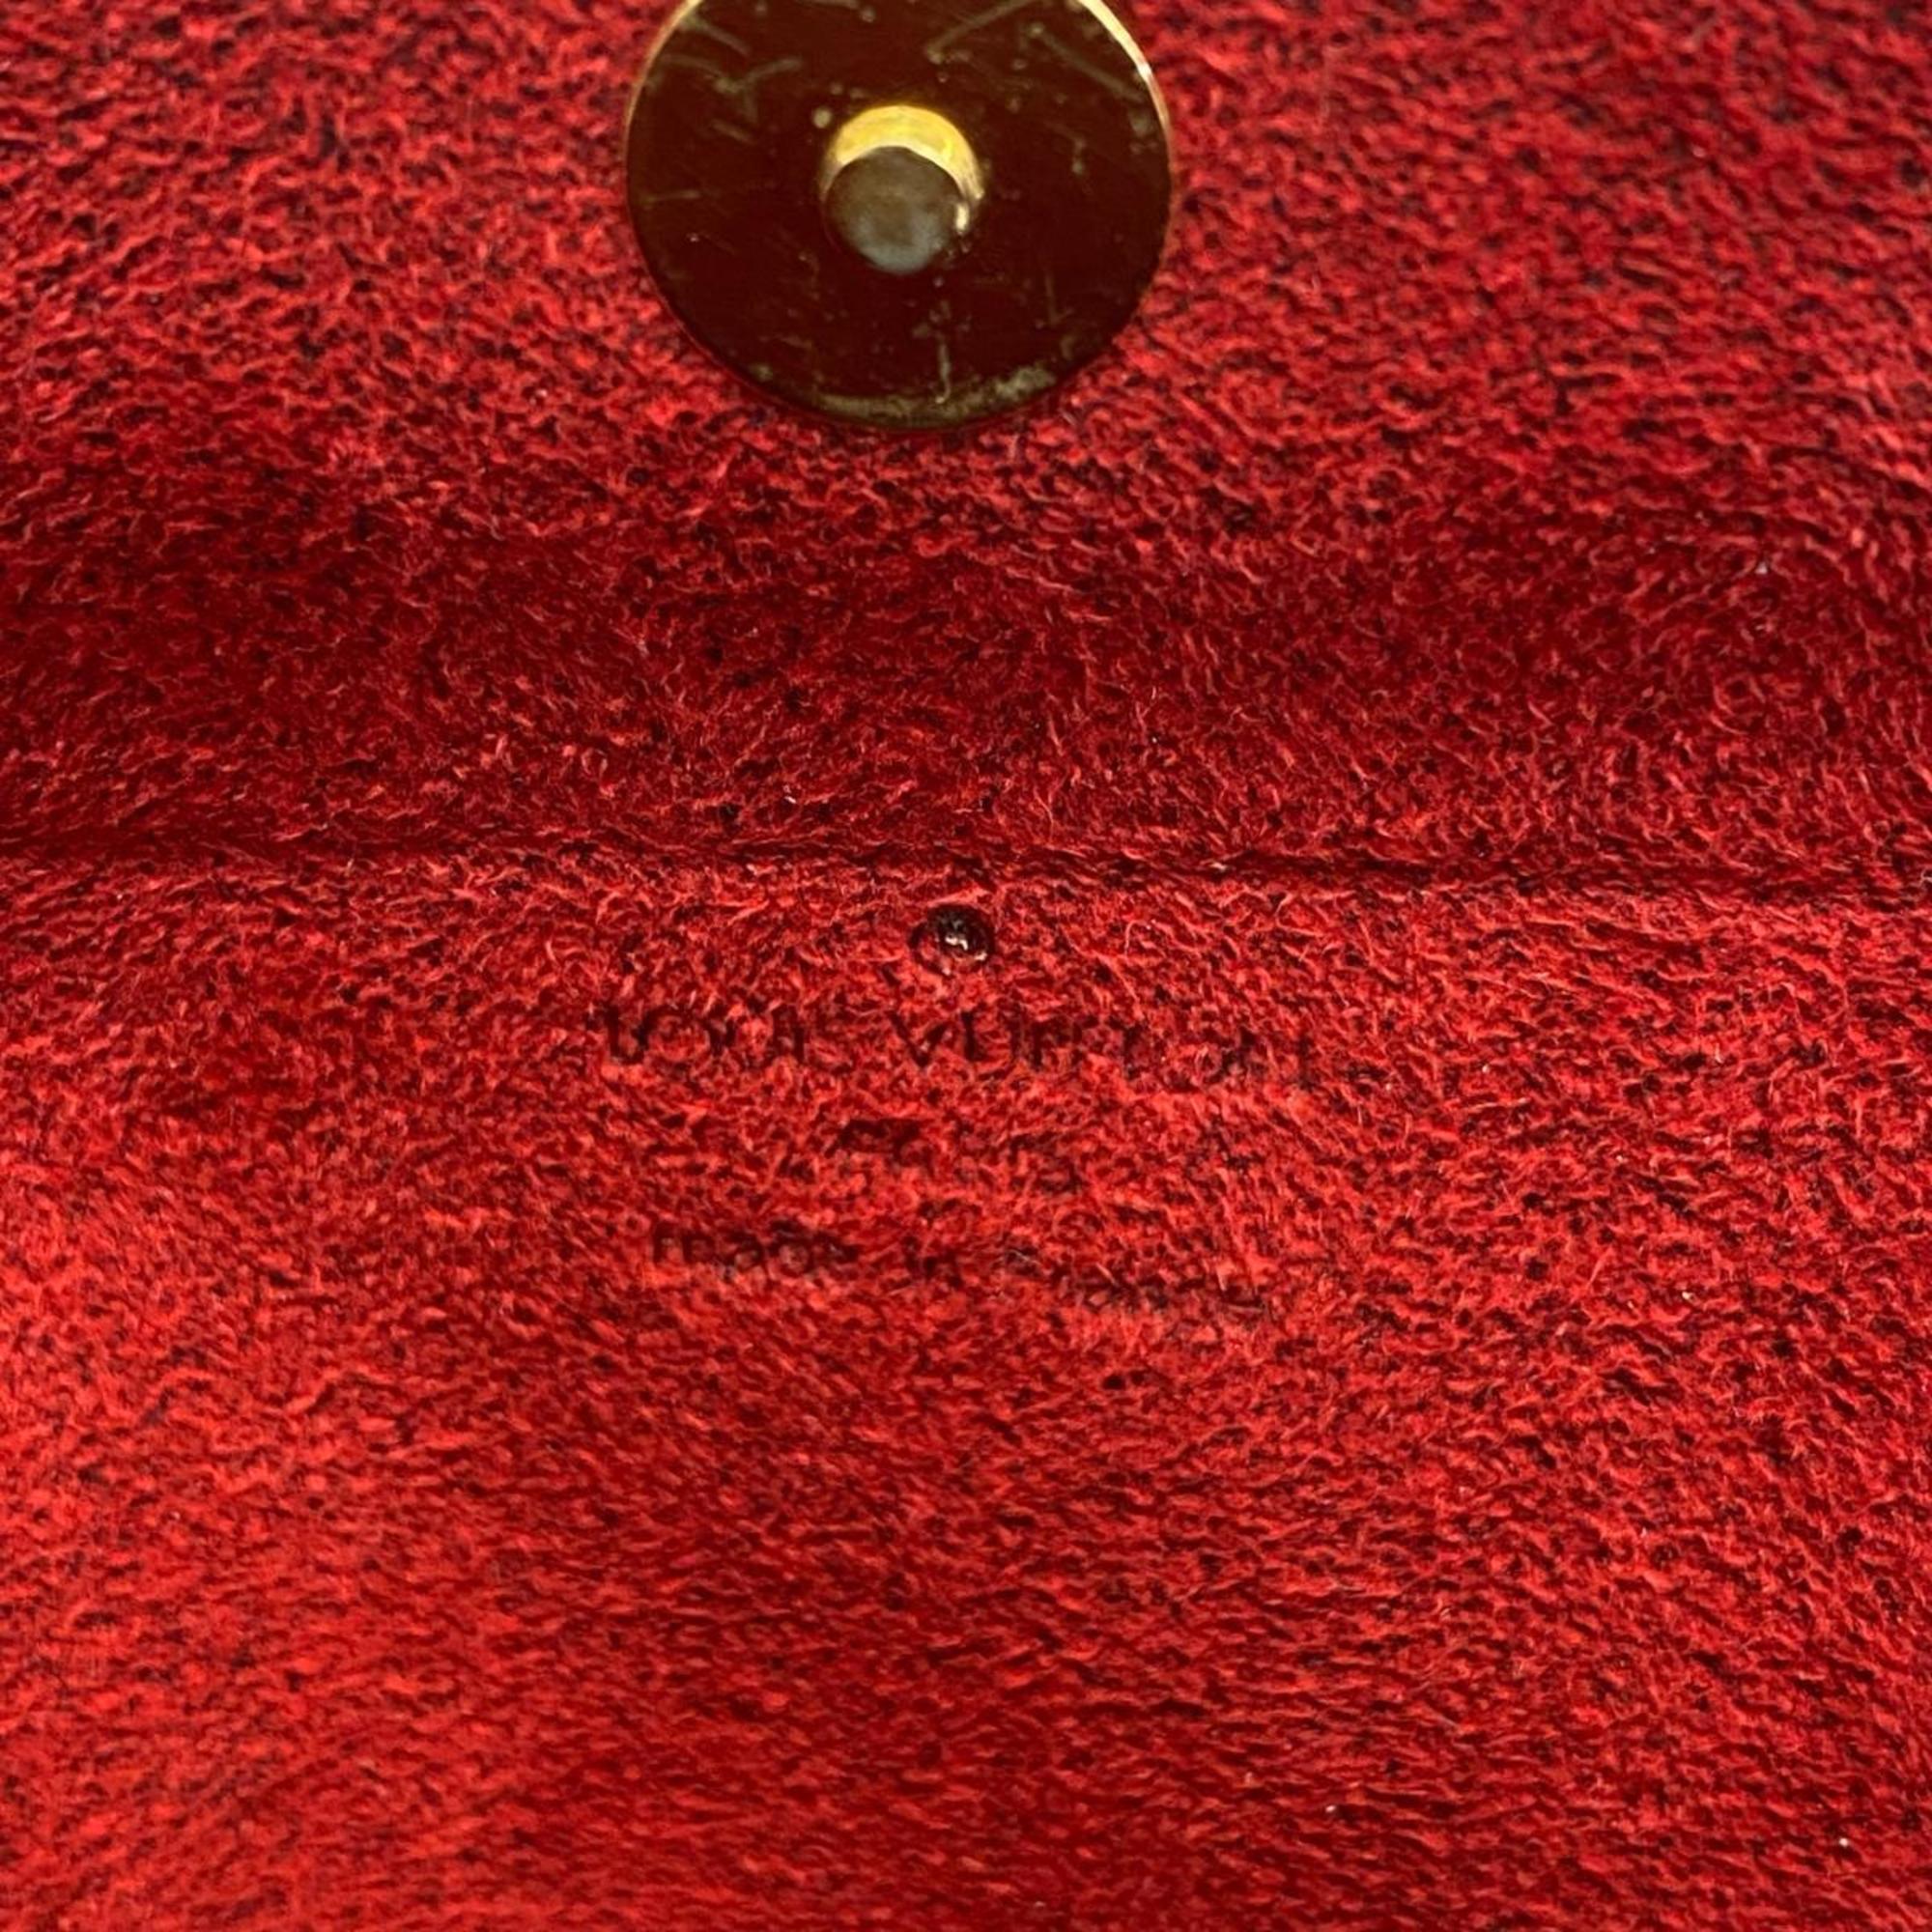 Louis Vuitton Handbag Monogram Recital M51900 Brown Ladies